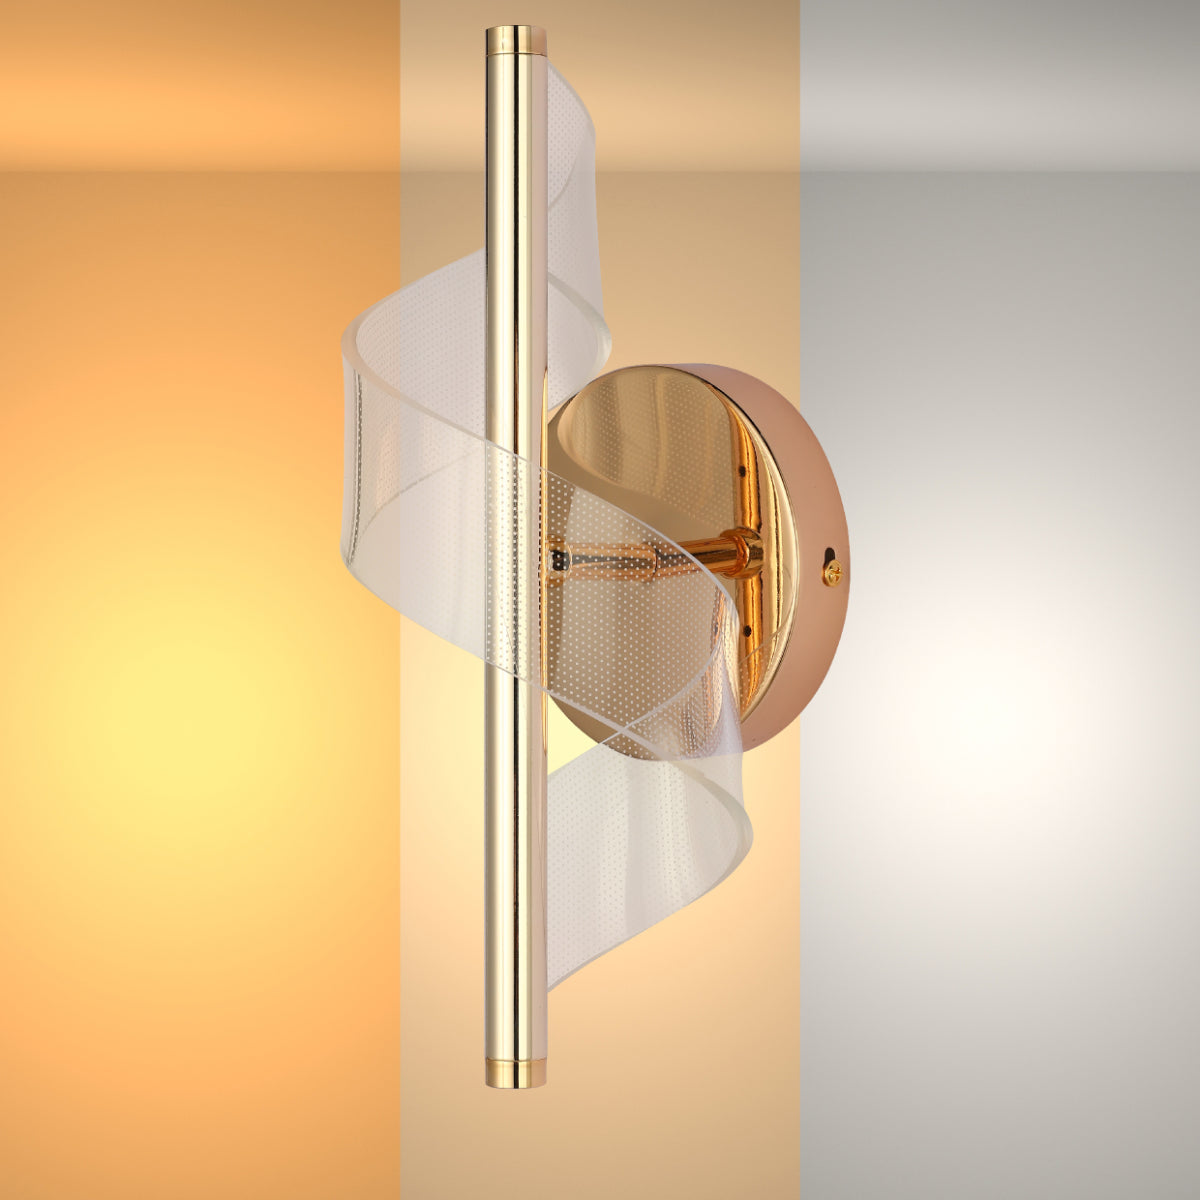 Main image of LED Spiral Modern Wall Sconce Light Chrome CCT Changable 151-19704